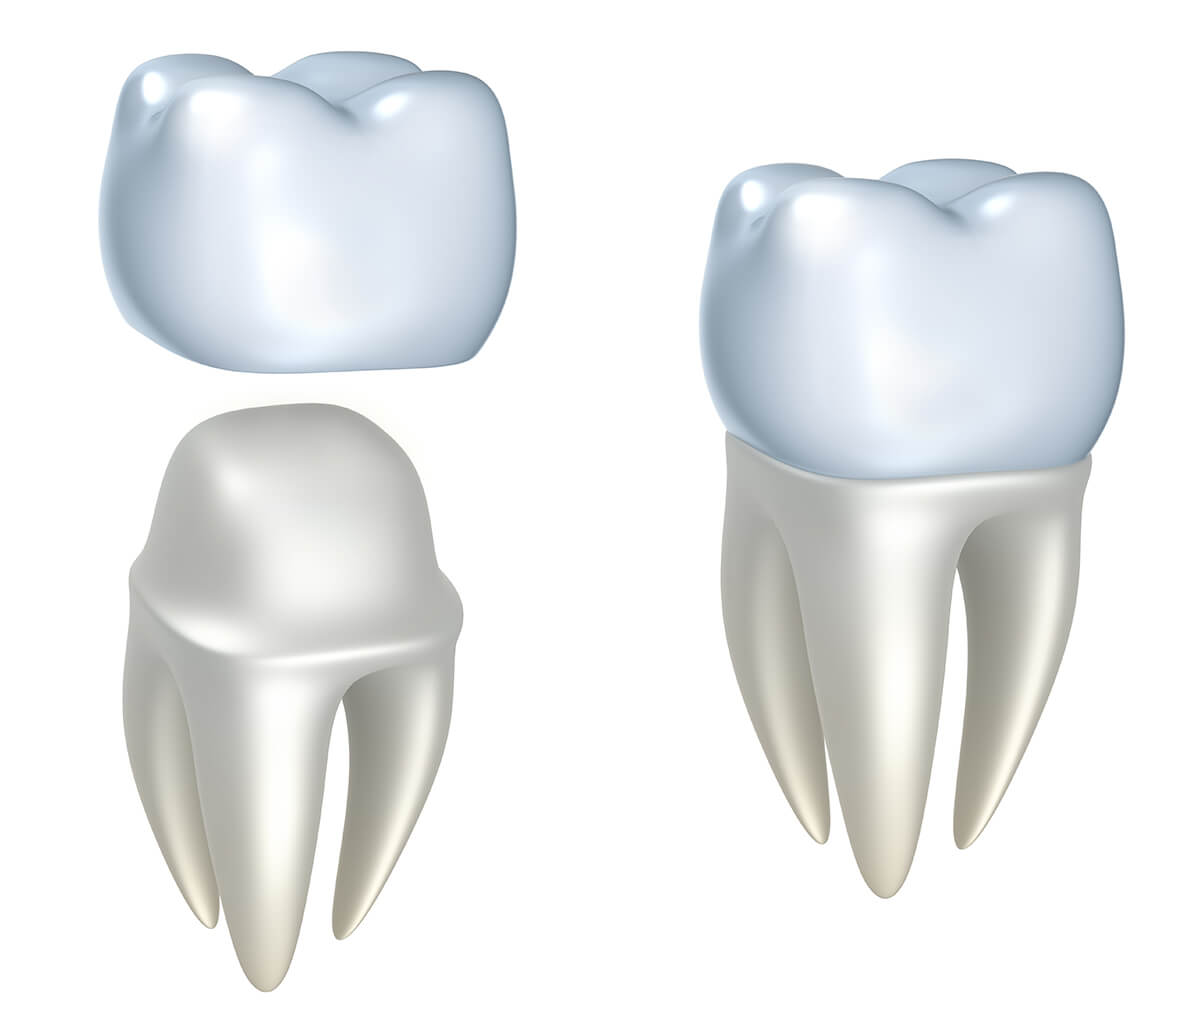 Dental Crown Replacement in Kirkland WA Area